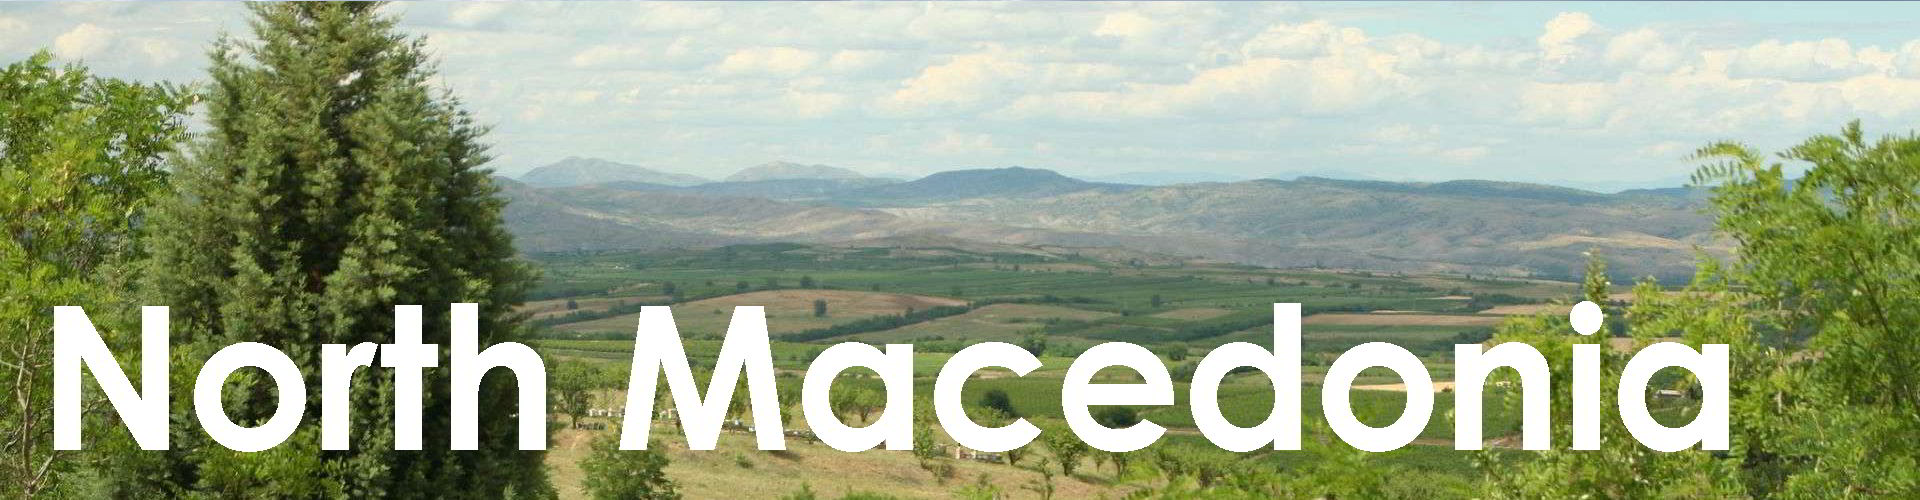 North Macedonia web button